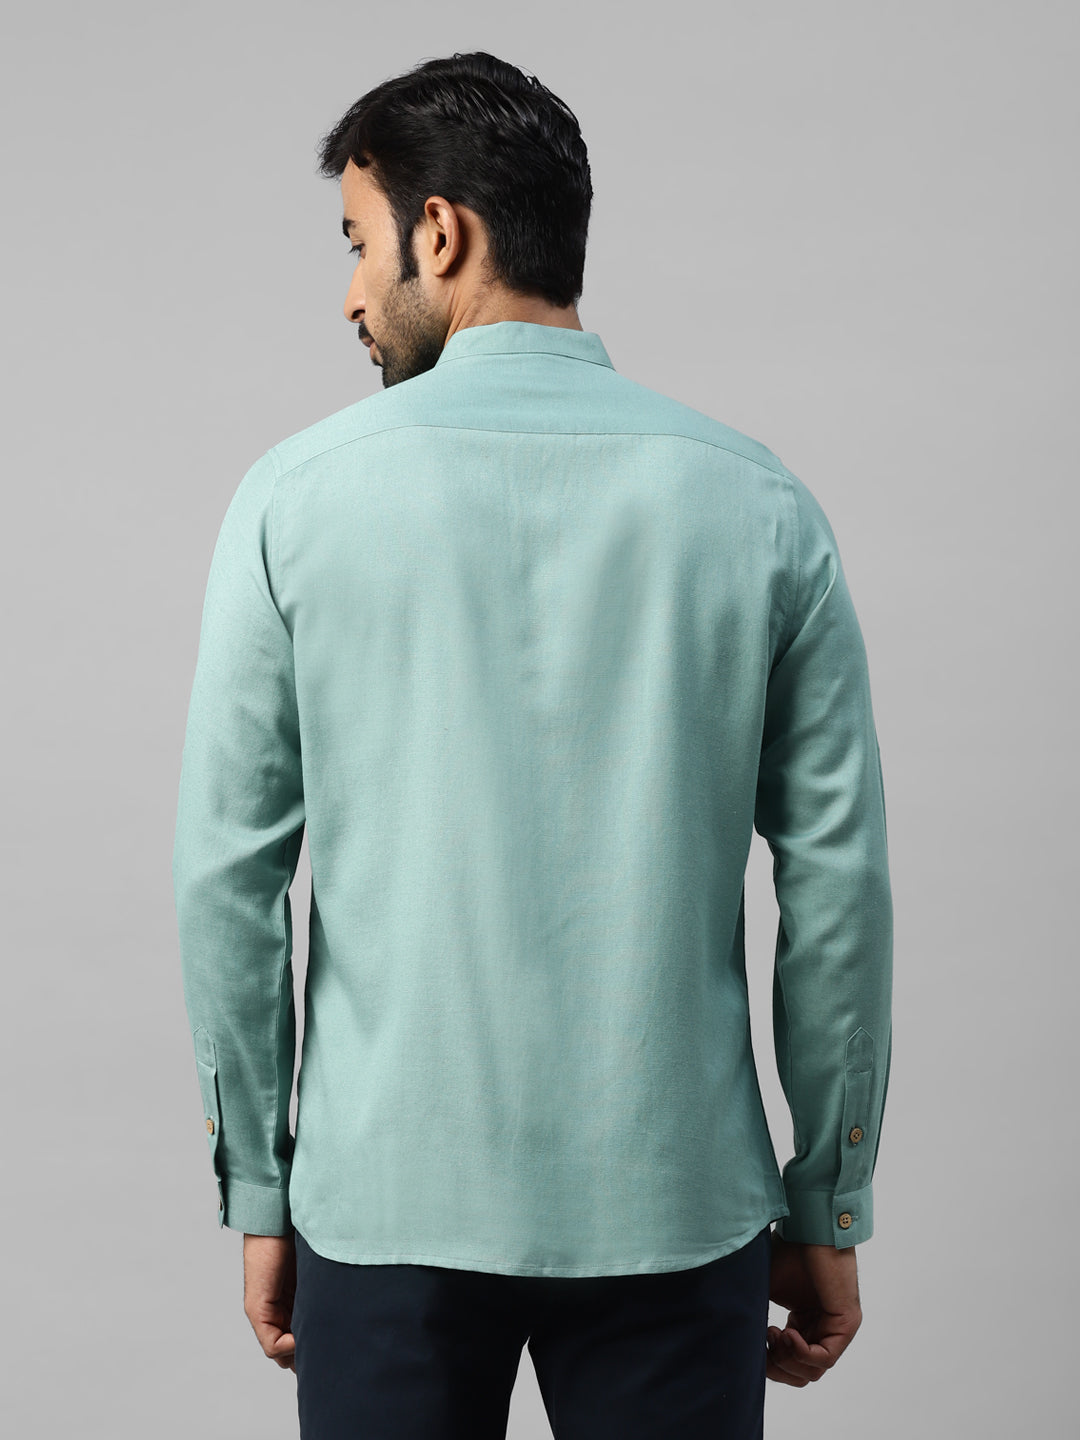 Don Vino Men's Sea Green Solid Slim Fit Shirt